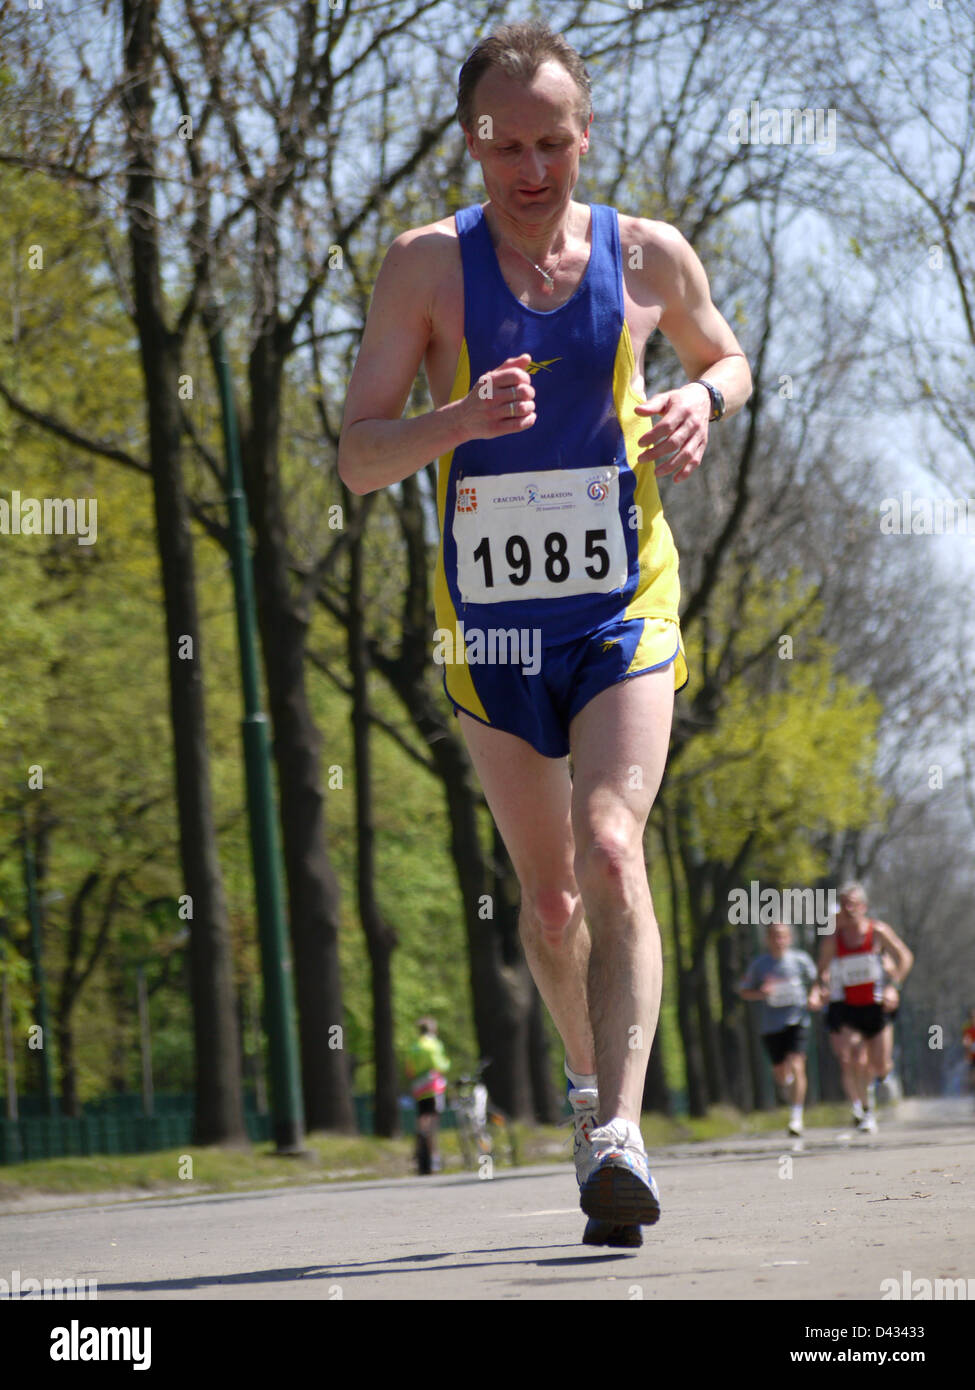 Marathon racer taking part in International Cracovia Marathon, held annually in Krakow, Poland Stock Photo